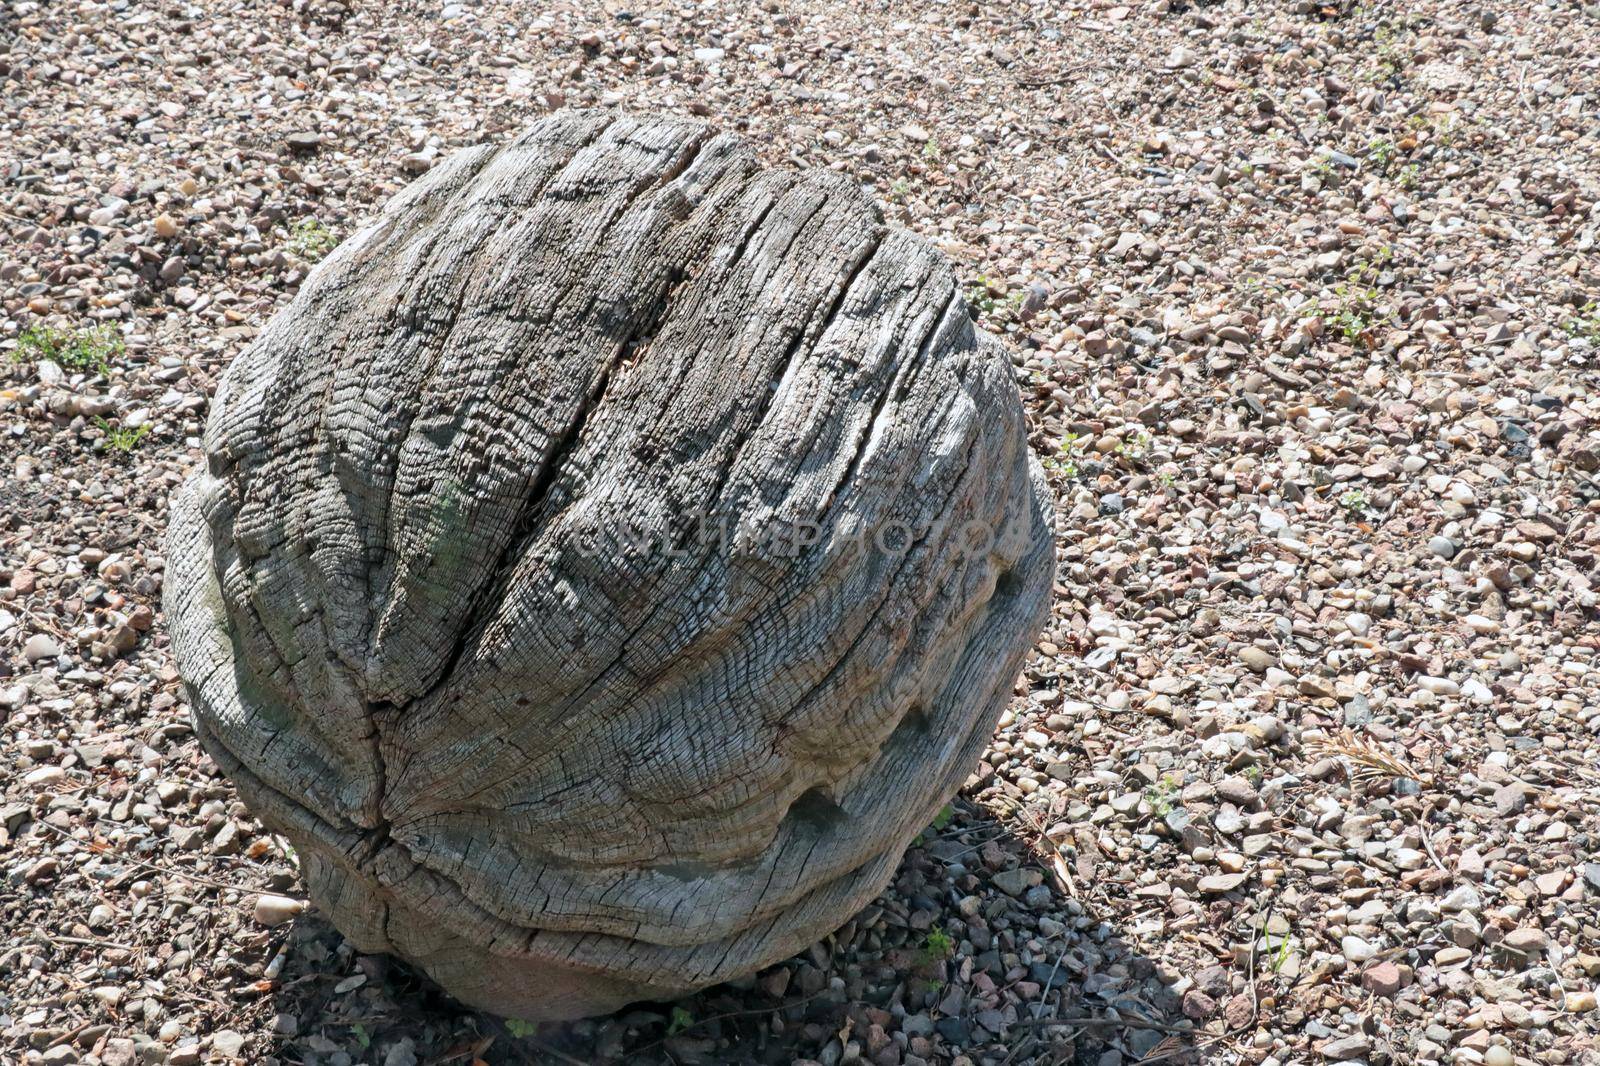 Large walnut tree on the ground. Wood items